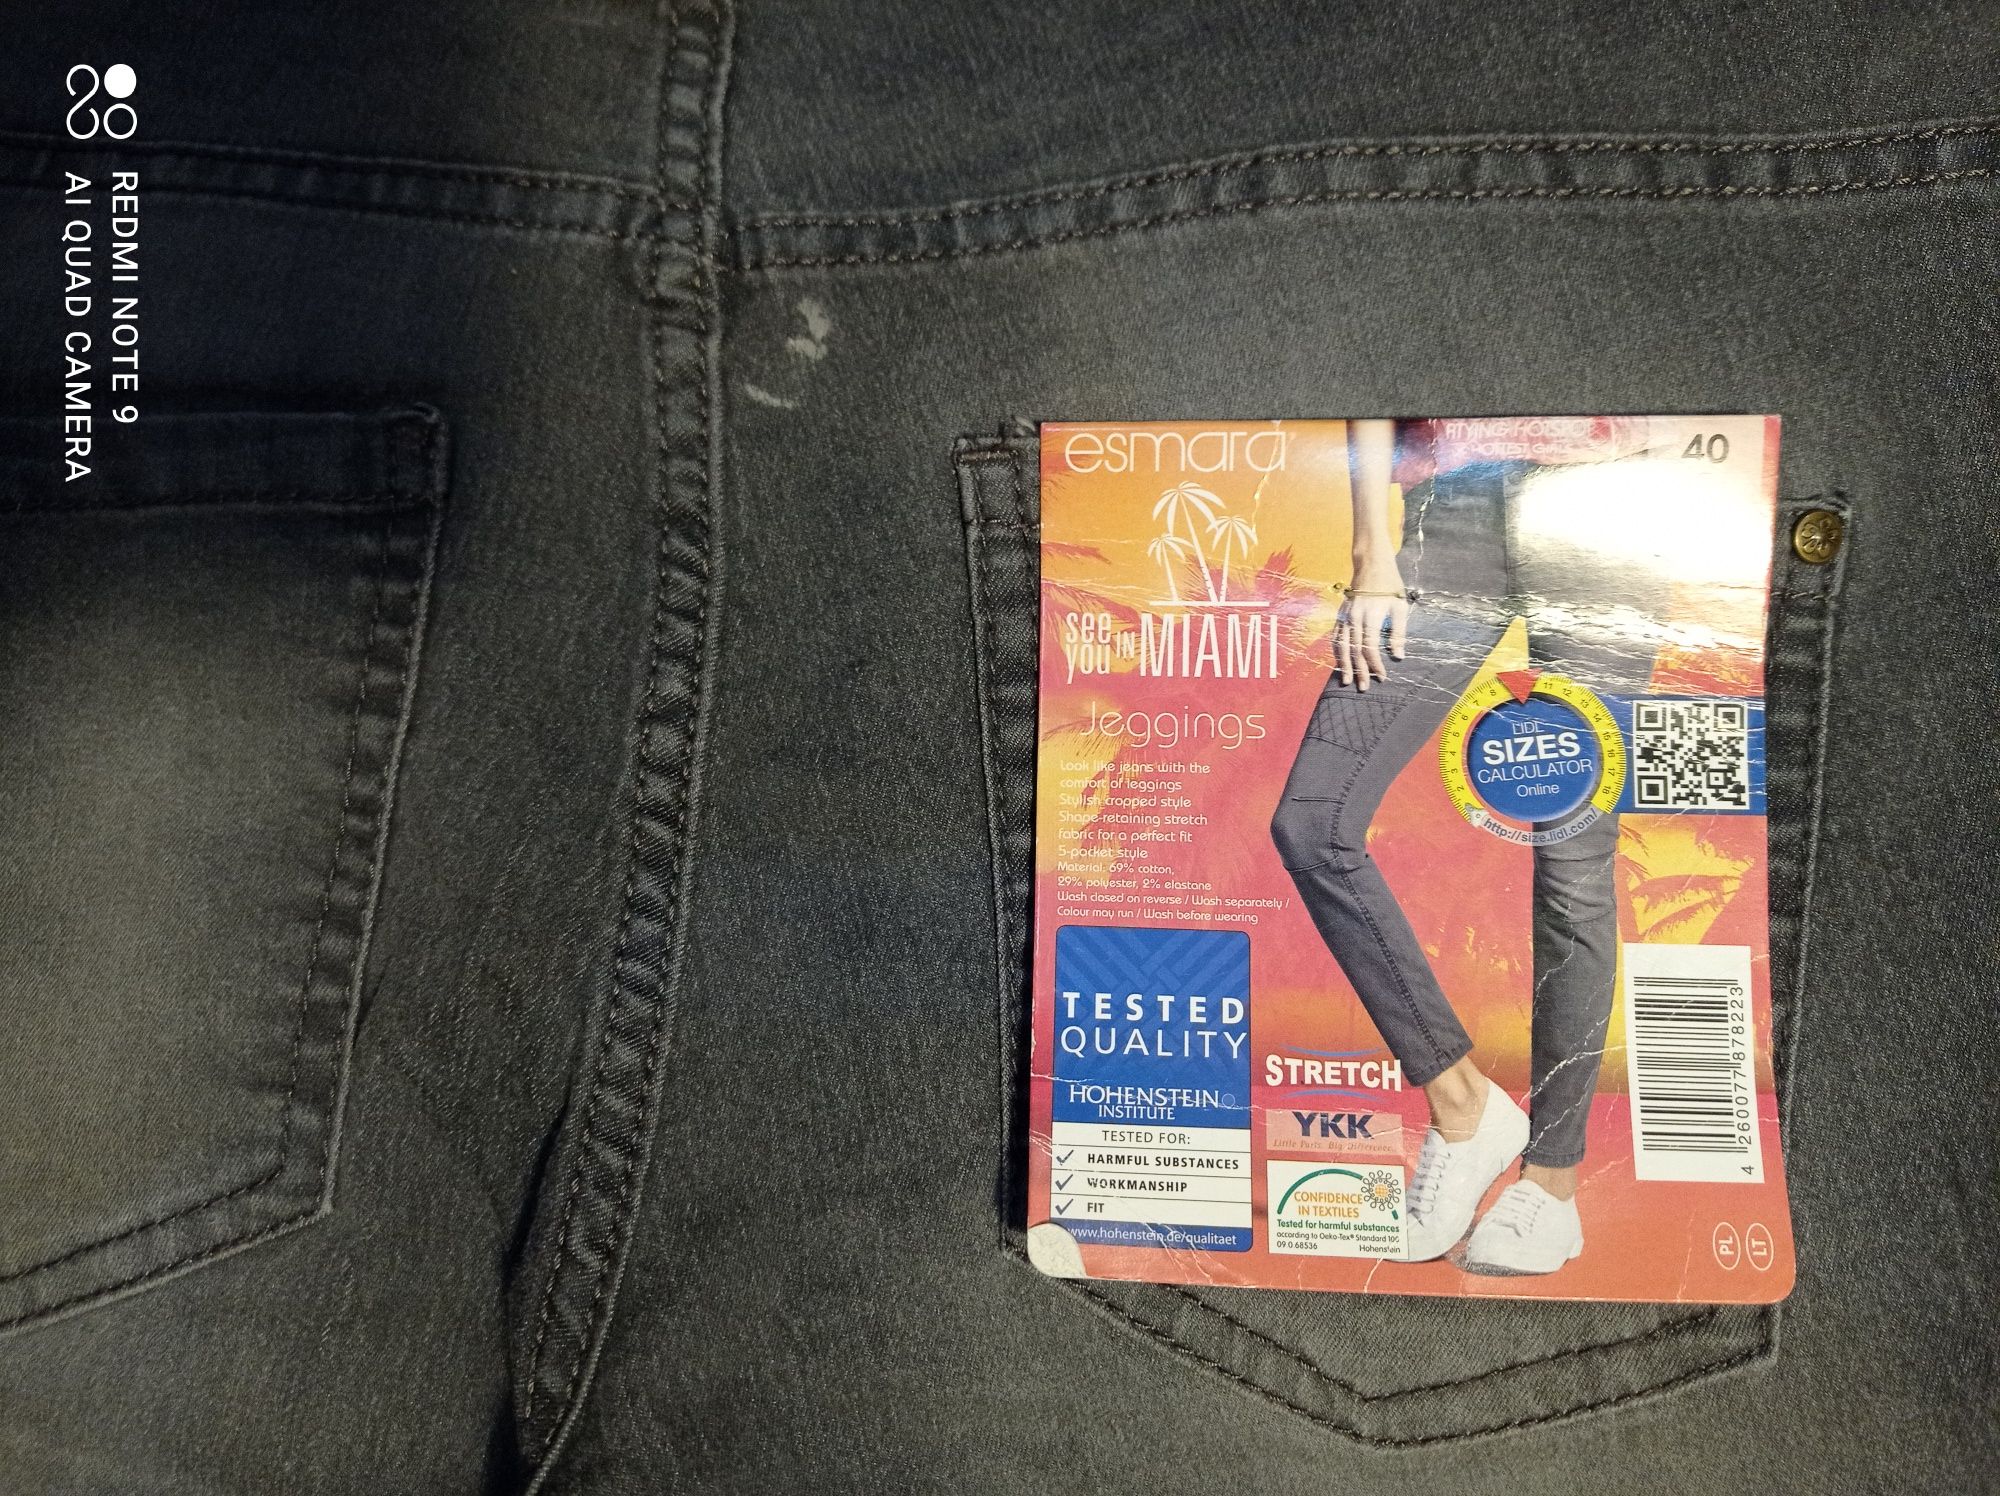 Nowe spodnie jeansy  jegginsy esmara 40